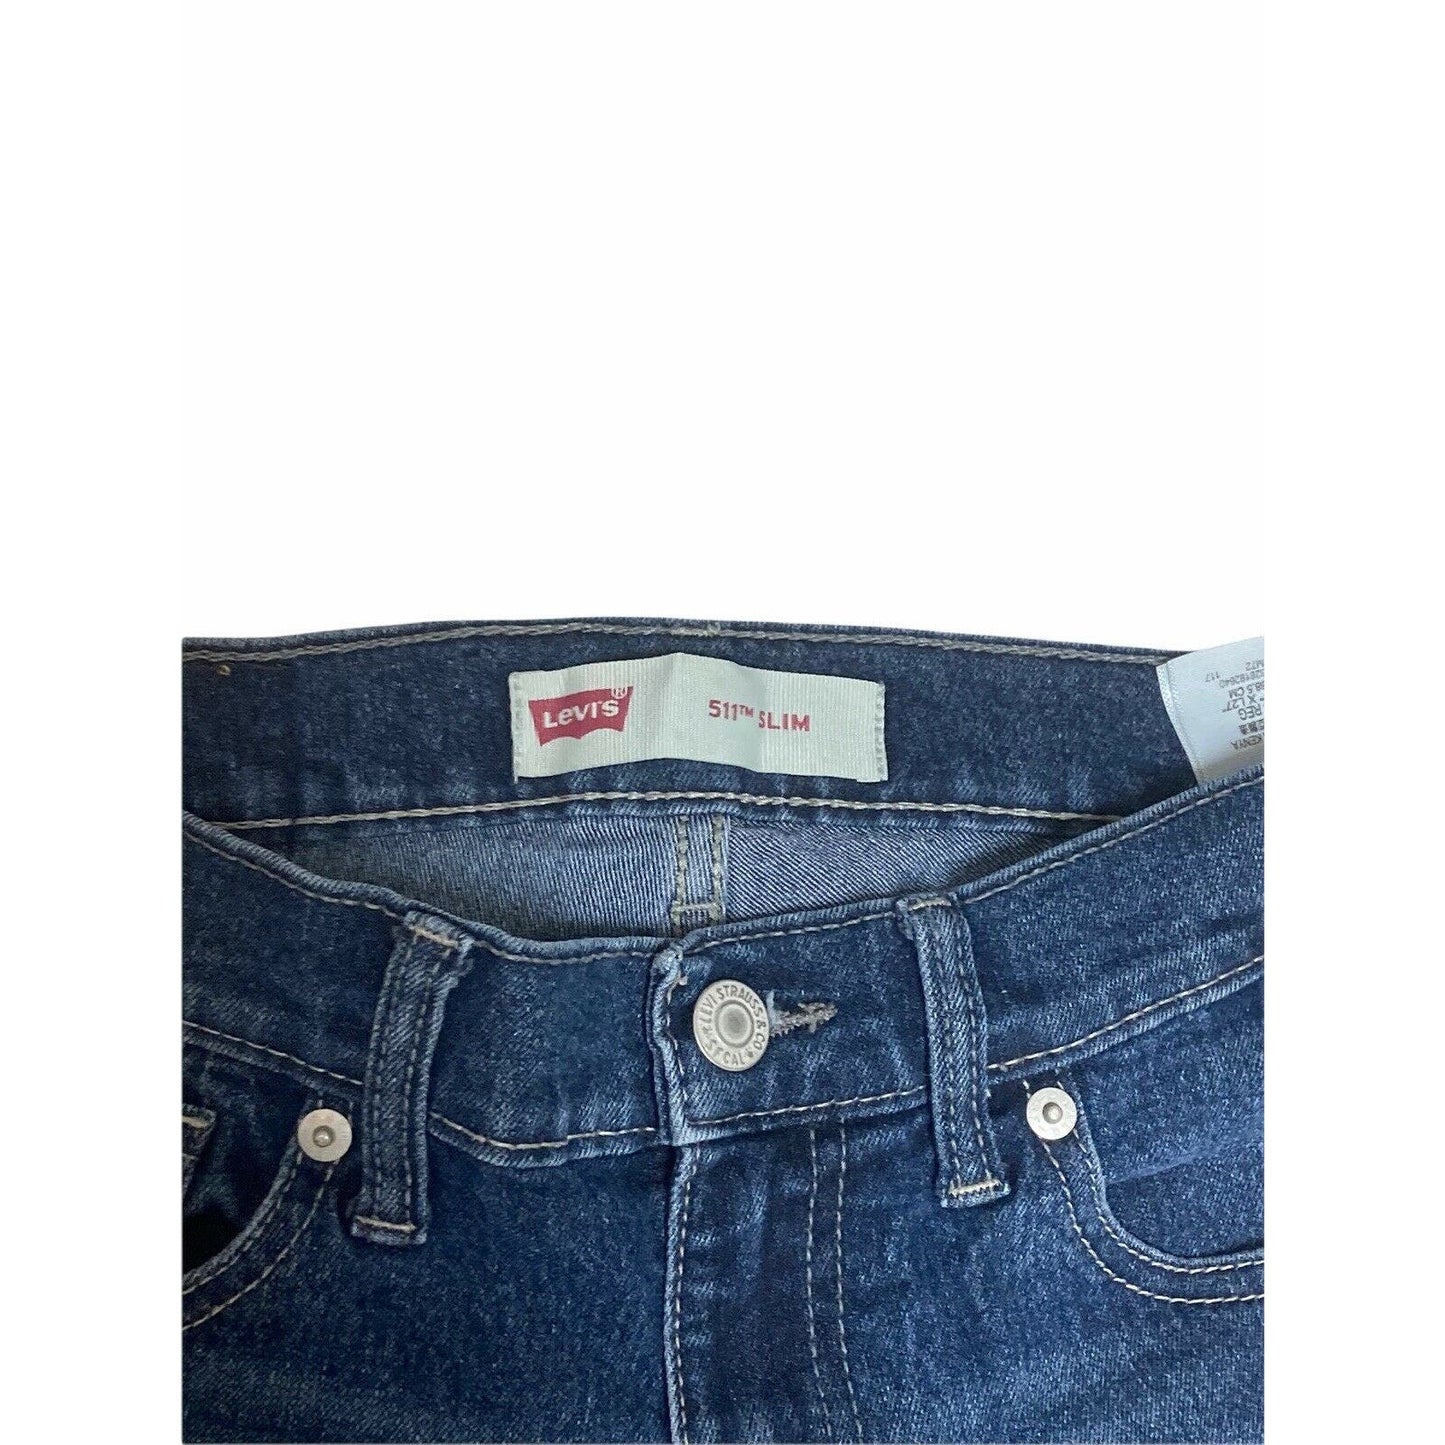 Levi’s 511 Boys Slim Straight Medium Wash Denim Jeans 14 Regular 27x27